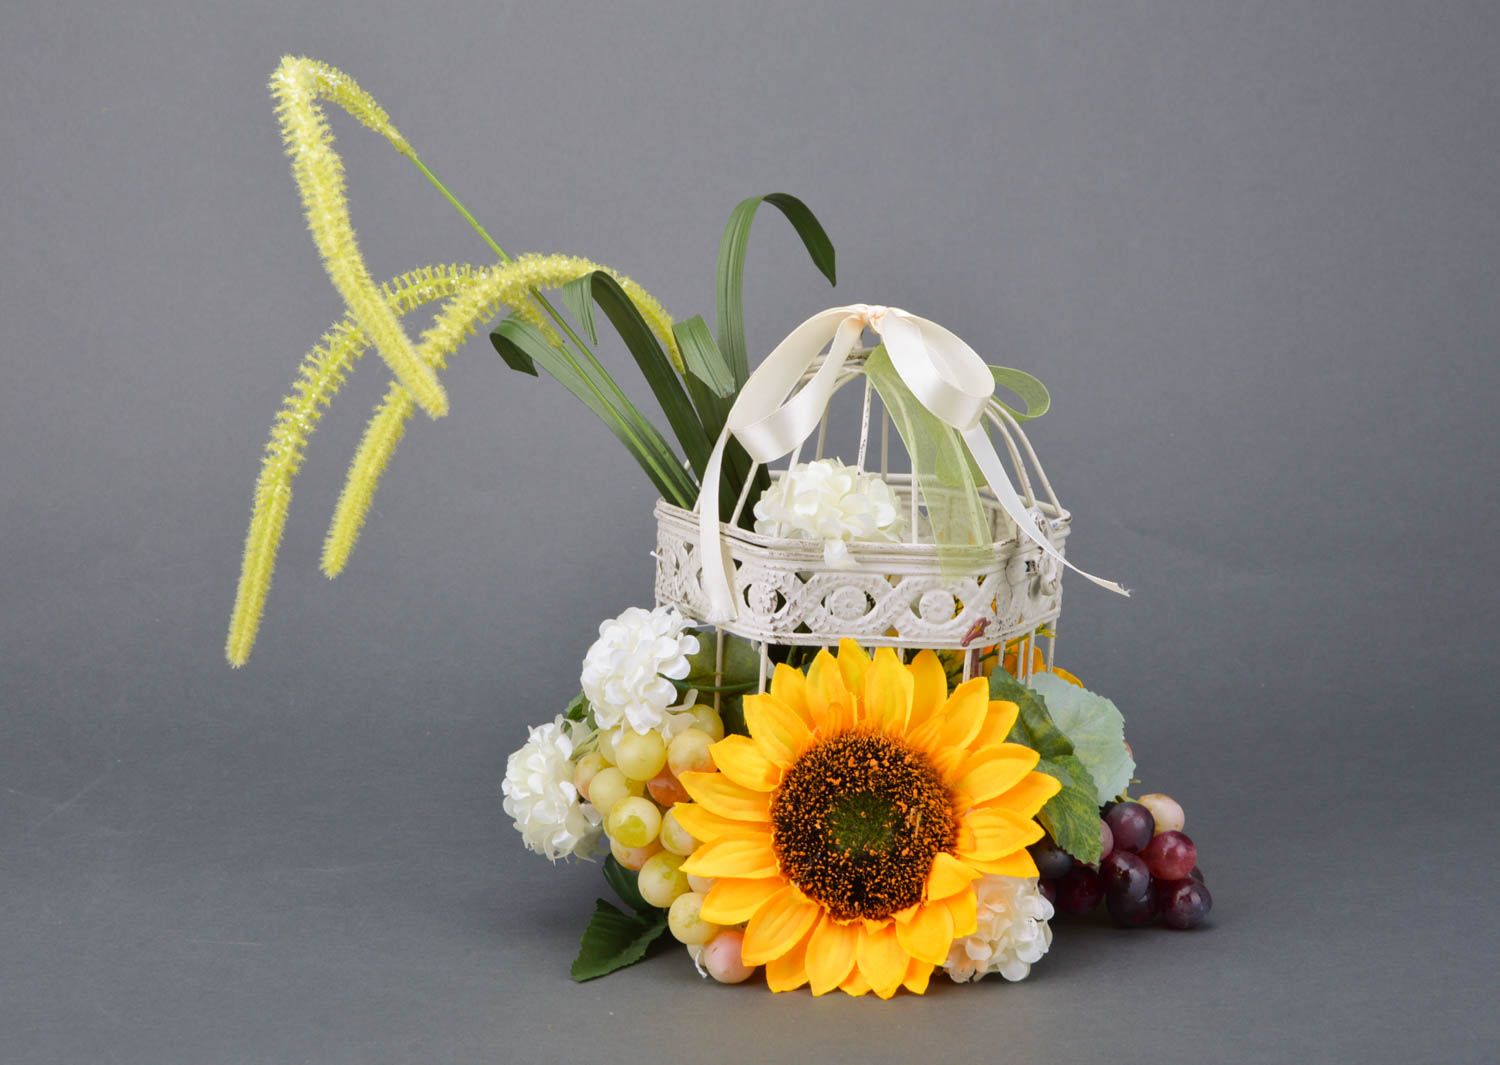 Handmade decorative cage with sunflowers designer beautiful home decor ideas photo 1